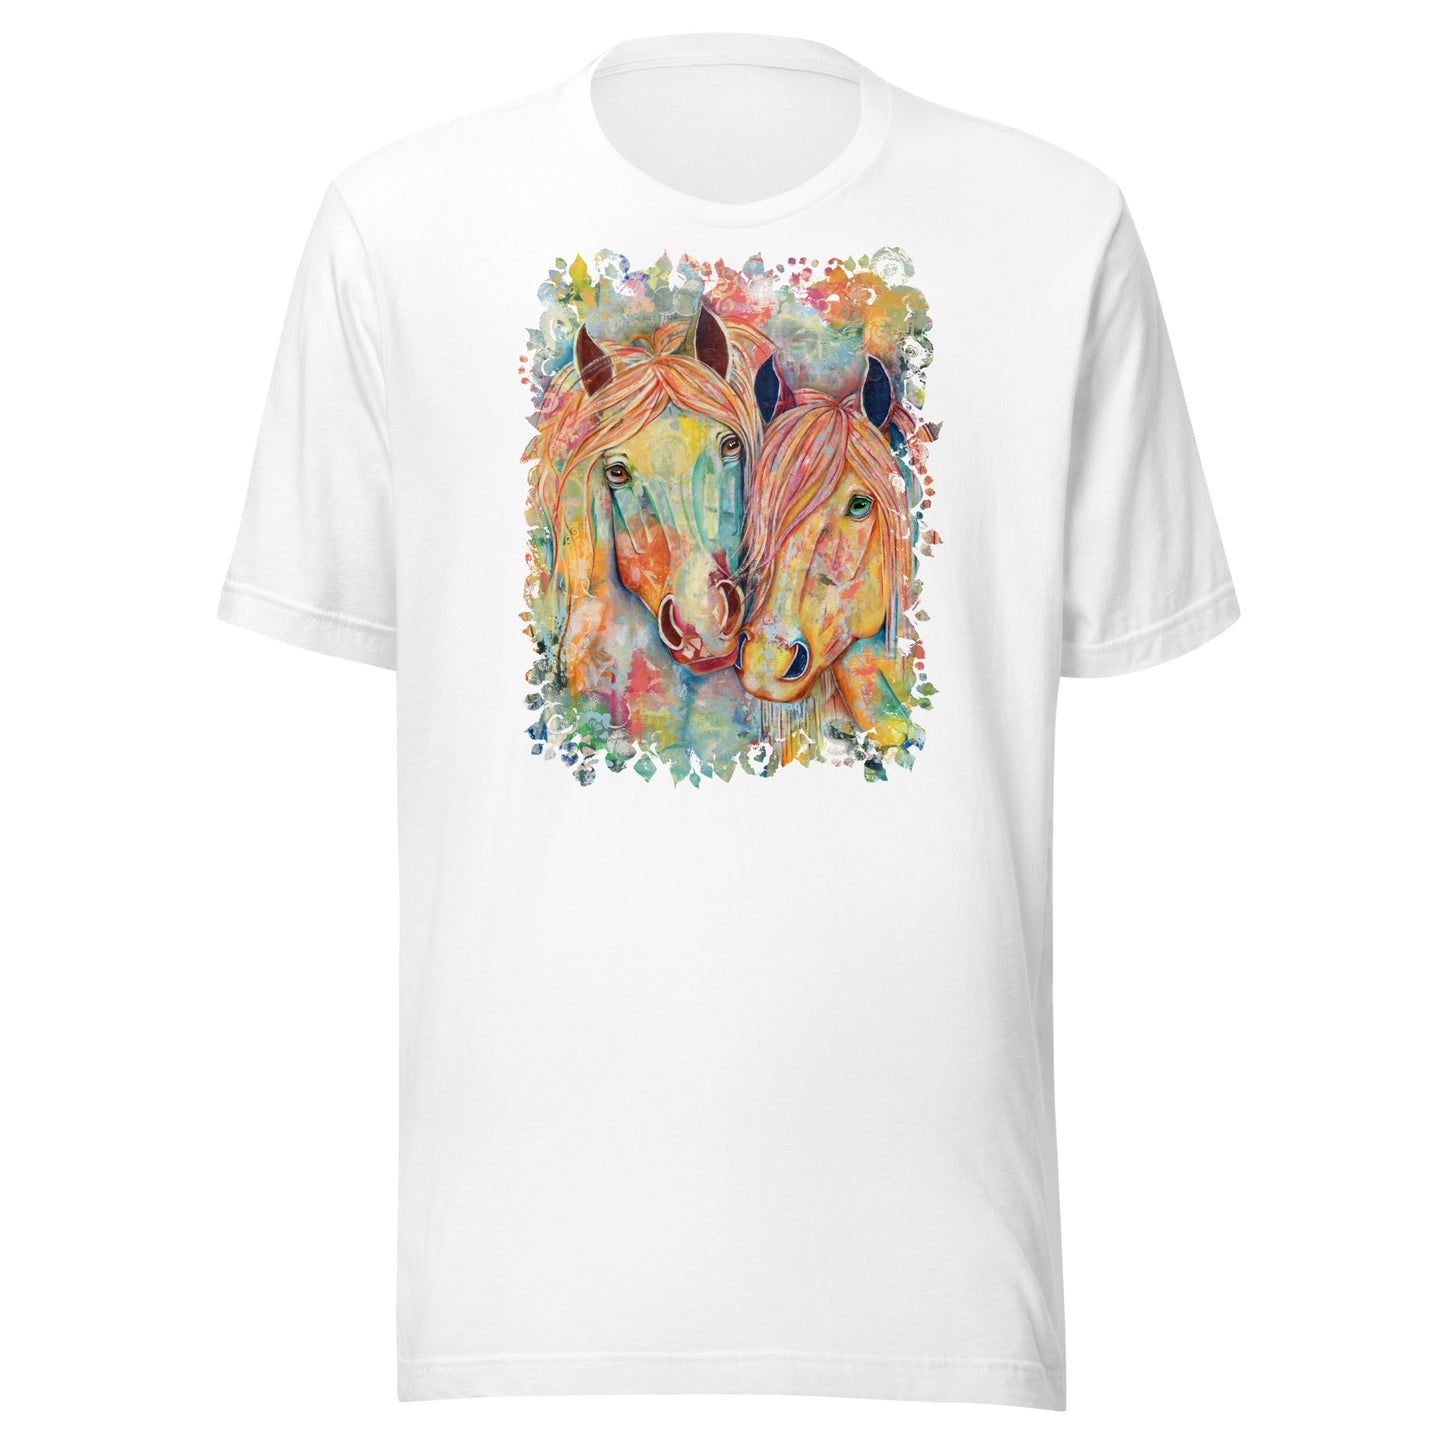 "Seek Harmony" Pony Prints Tee Unisex T-Shirt